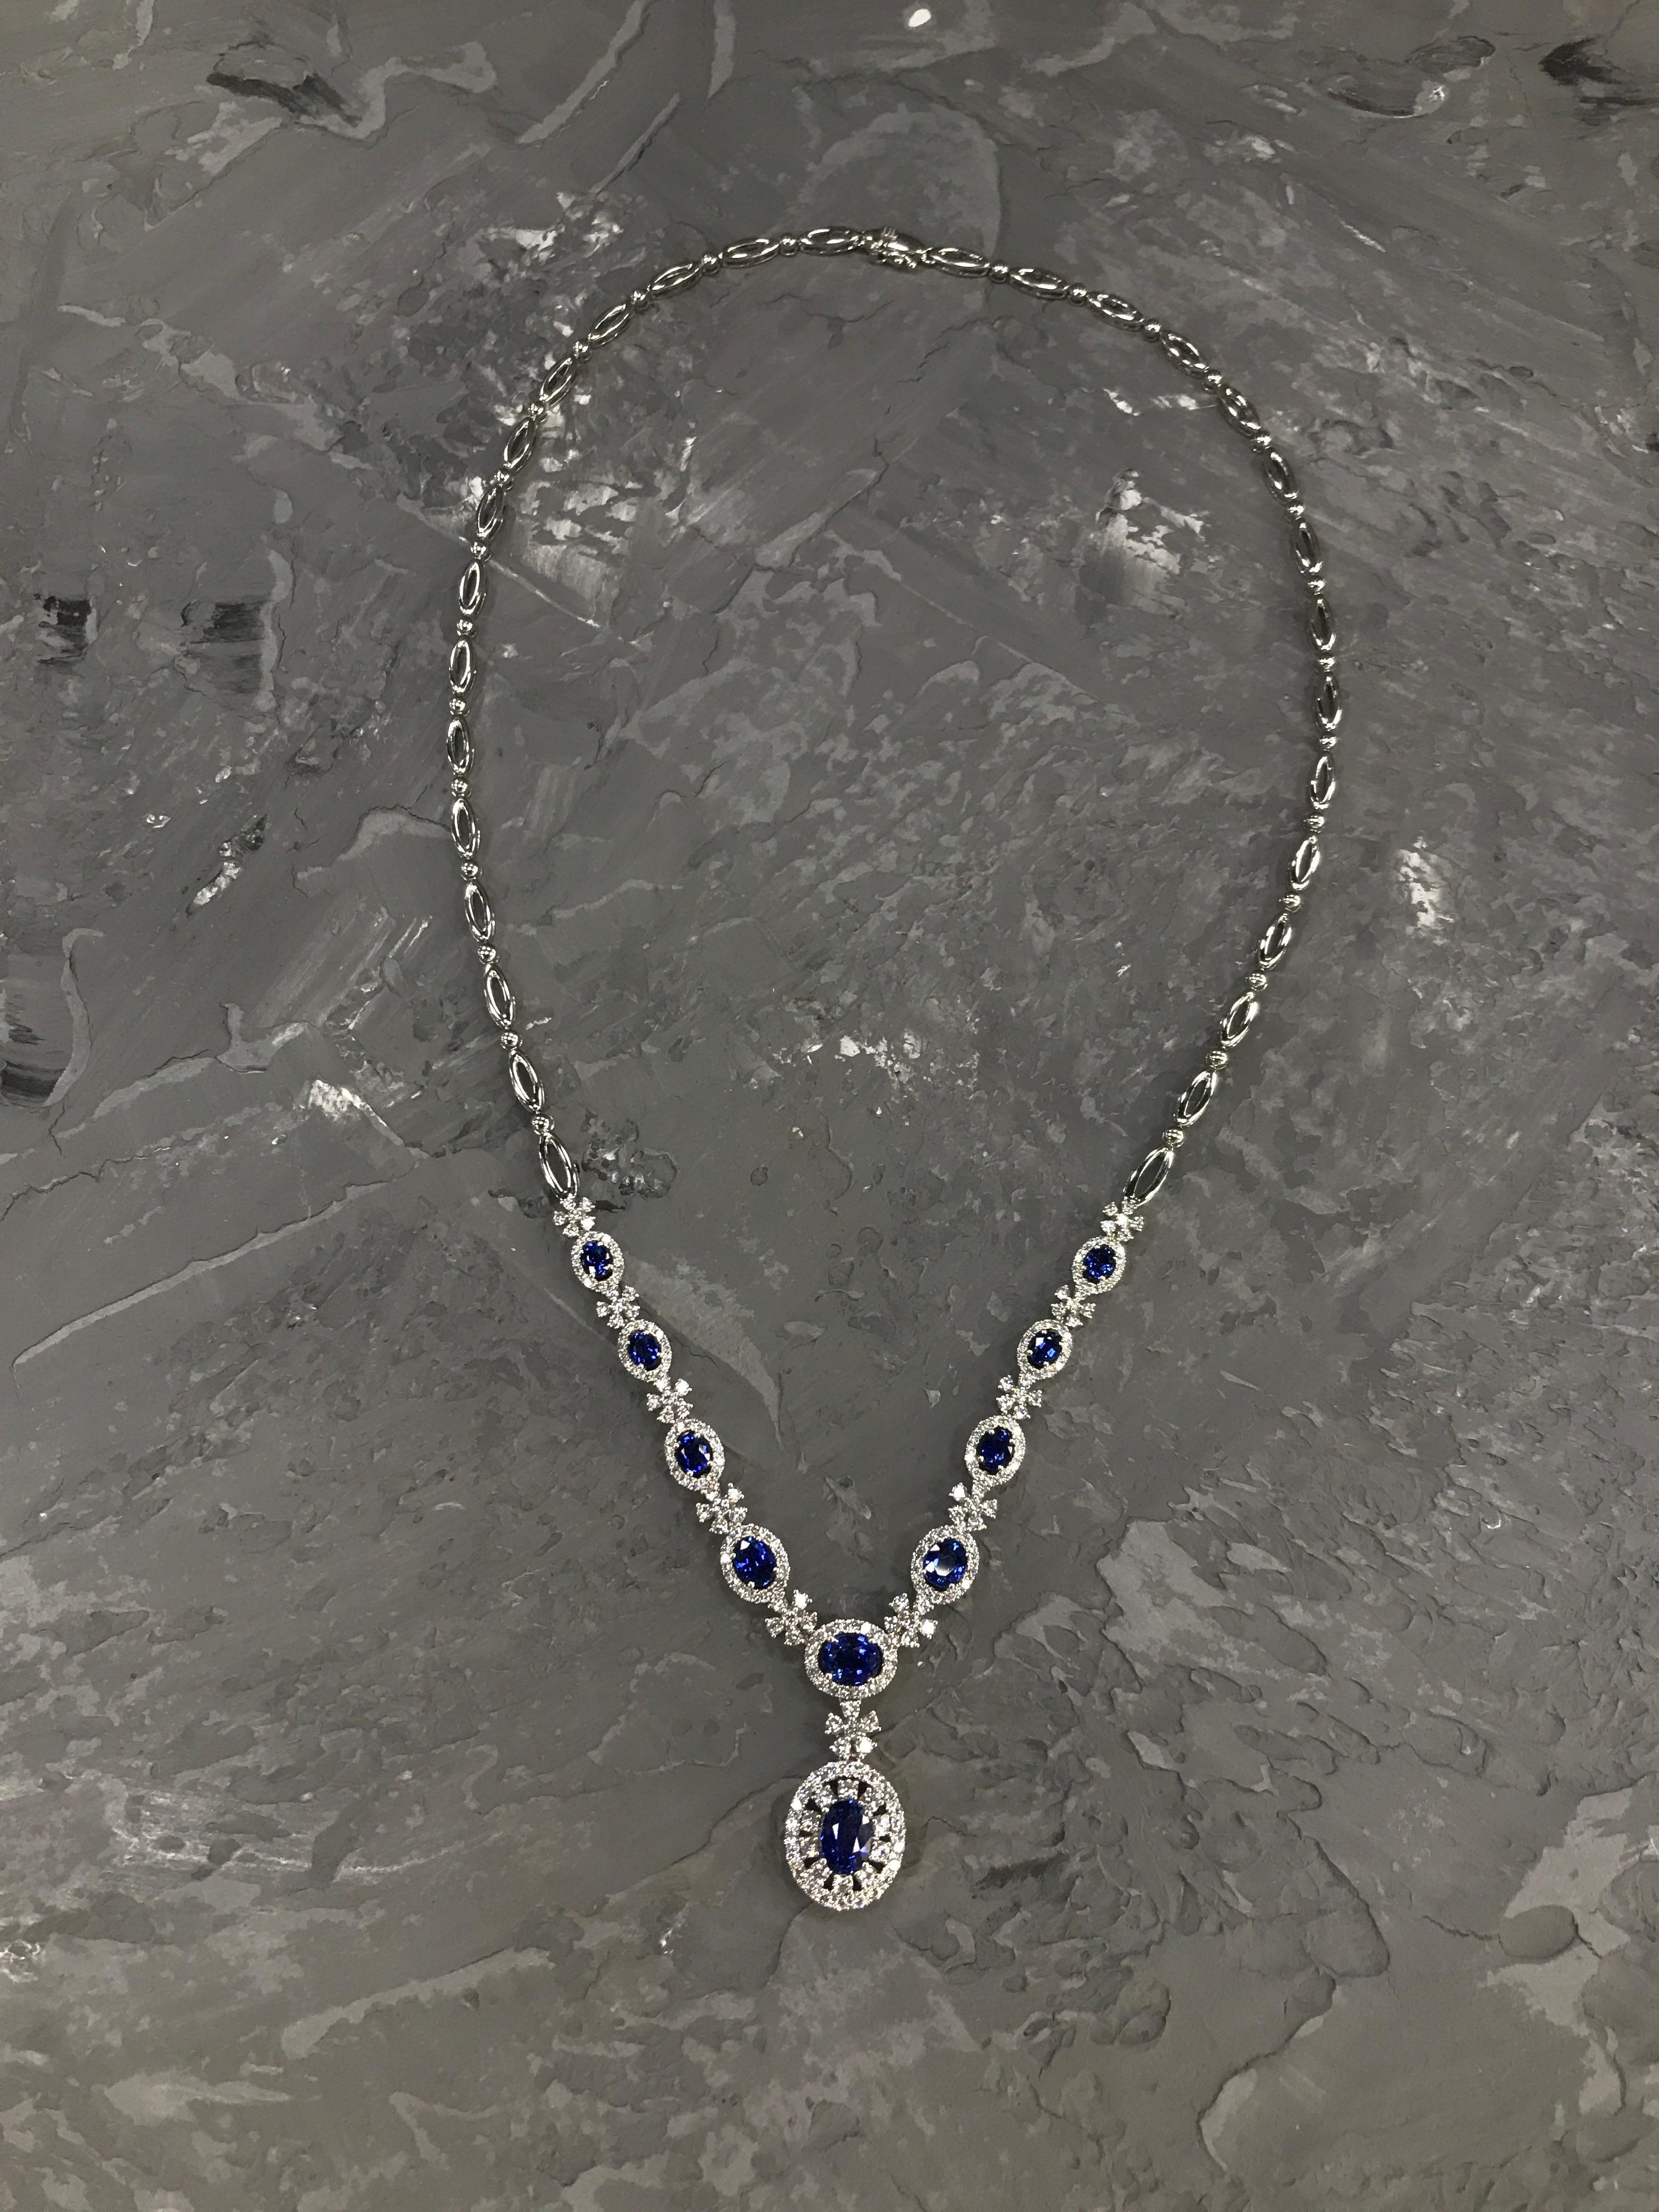 royal blue sapphire pendant